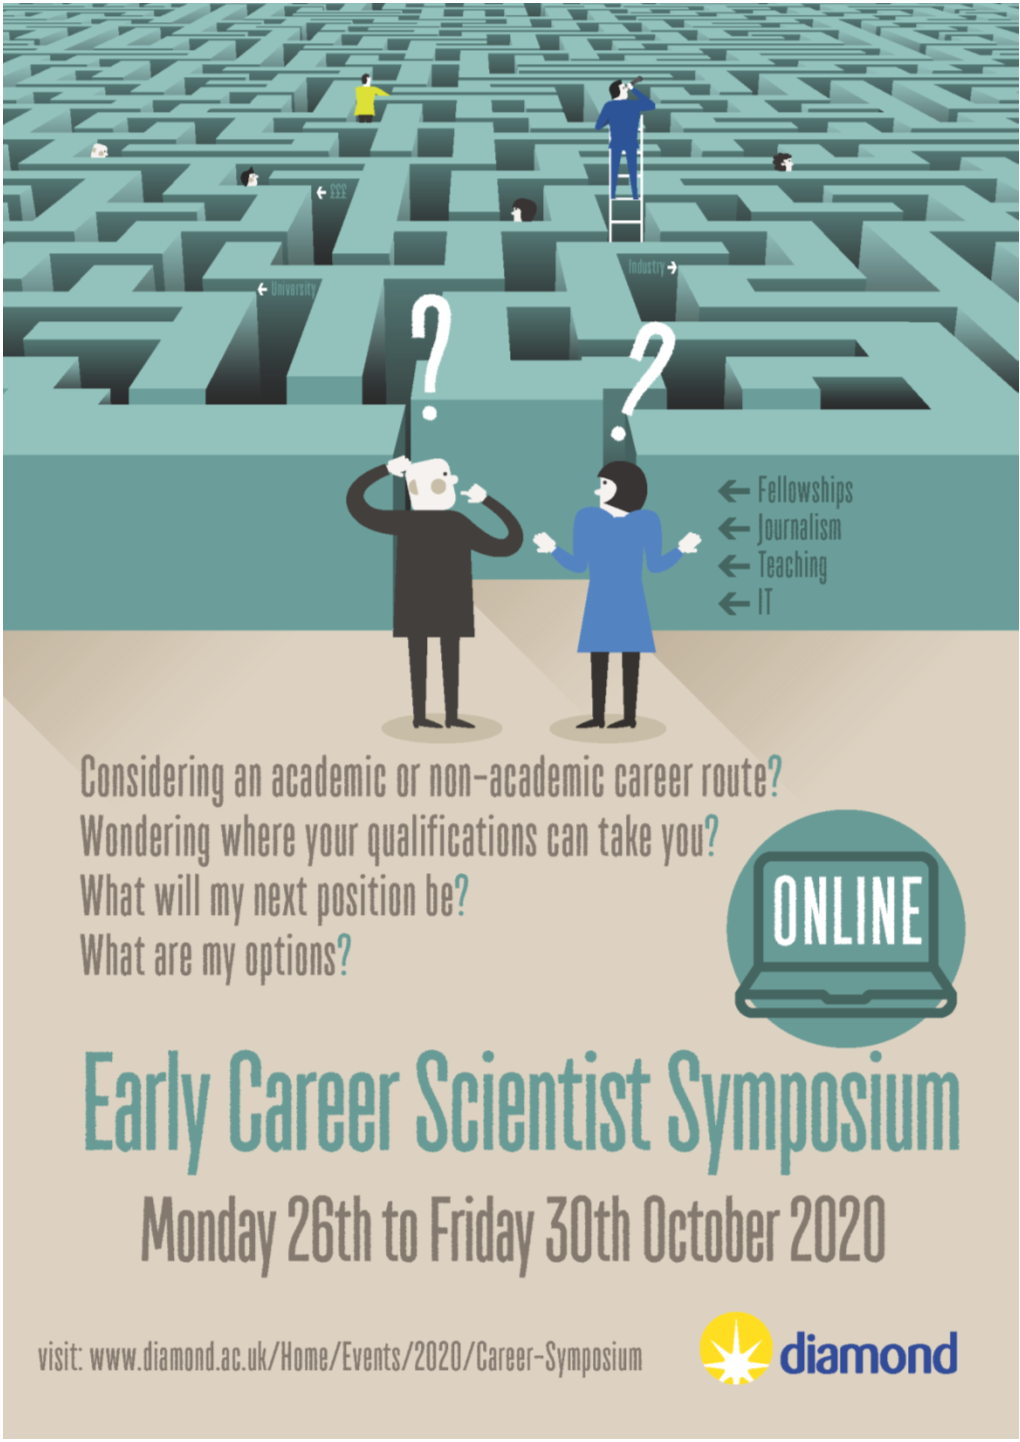 Early Career Scientist Symposium 26 - 30 October 2020